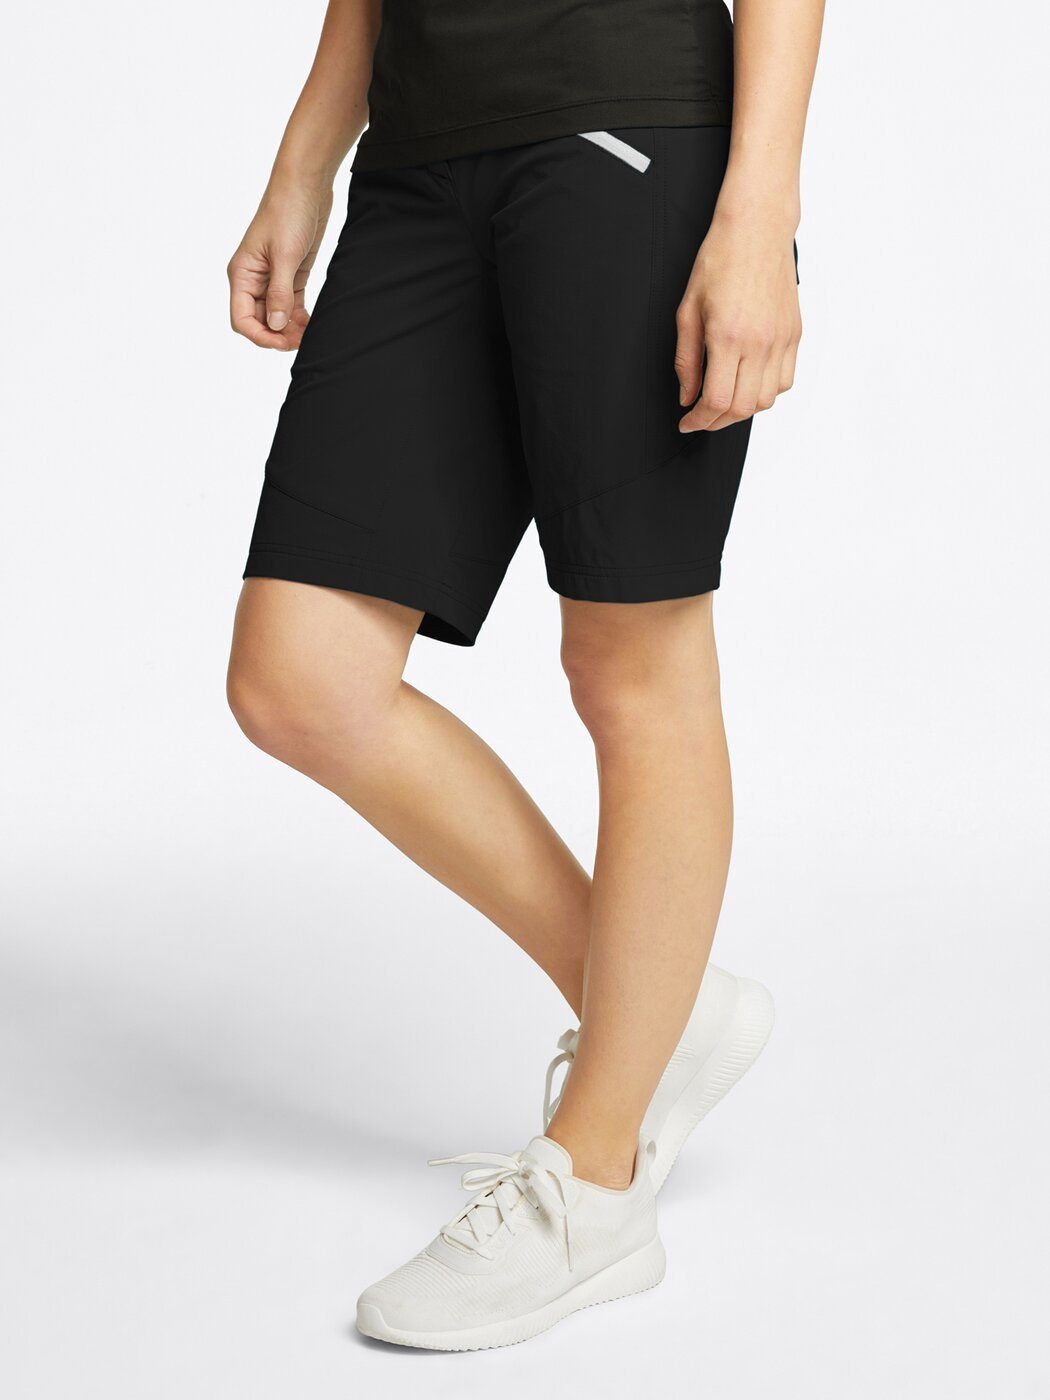 Ziener Shorts (shorts) 1201 black.white X-Function NASITA lady